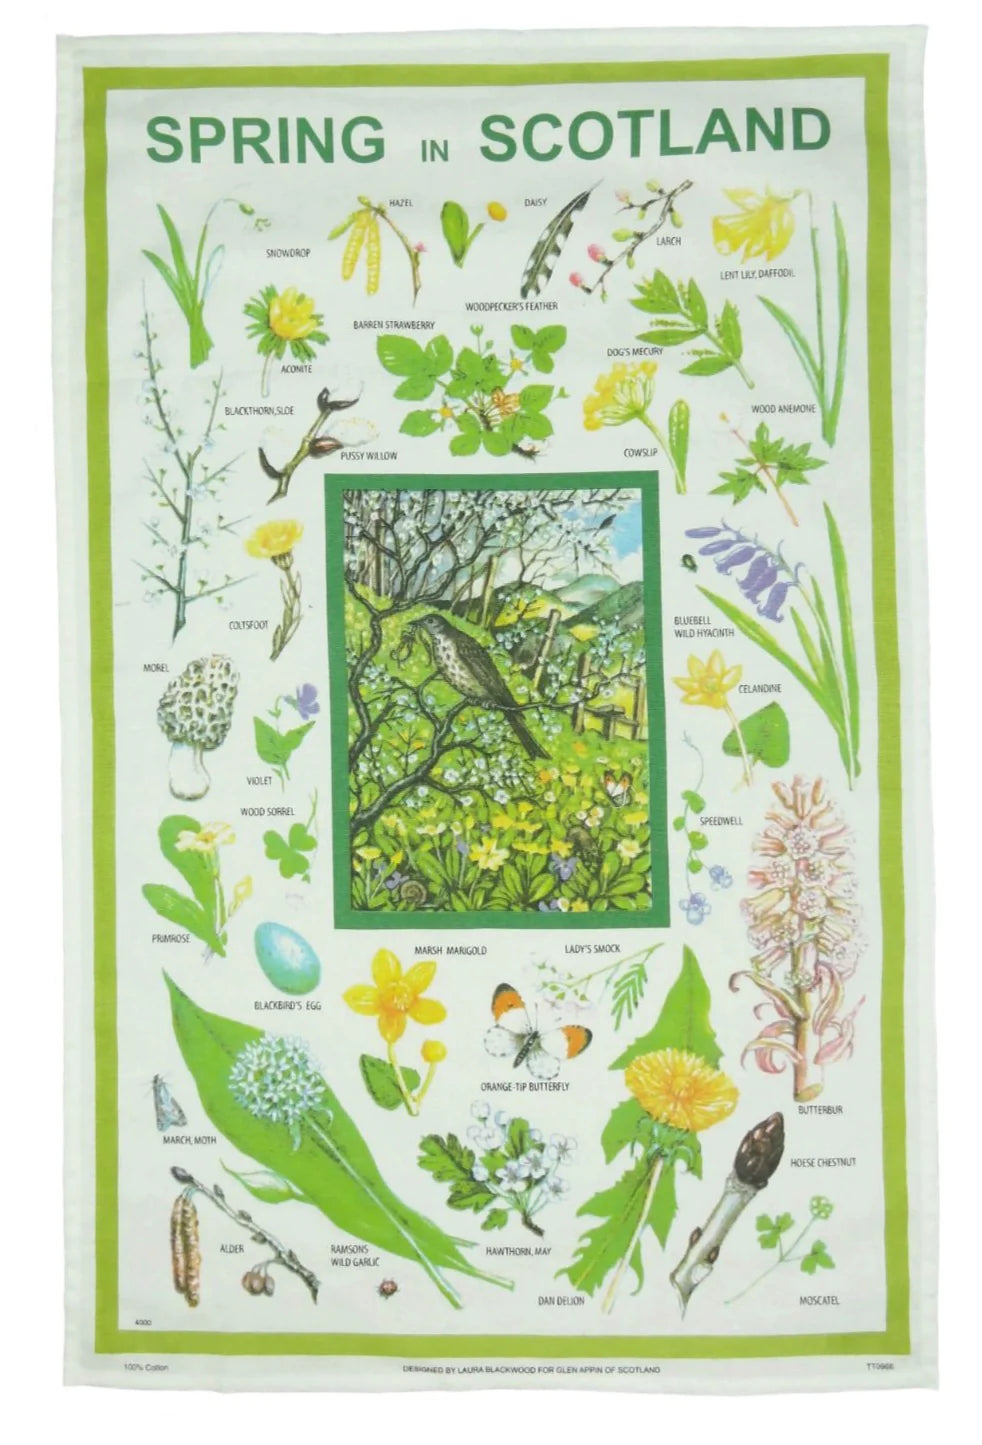 Glen Appin Tea Towel - Spring In Scotland